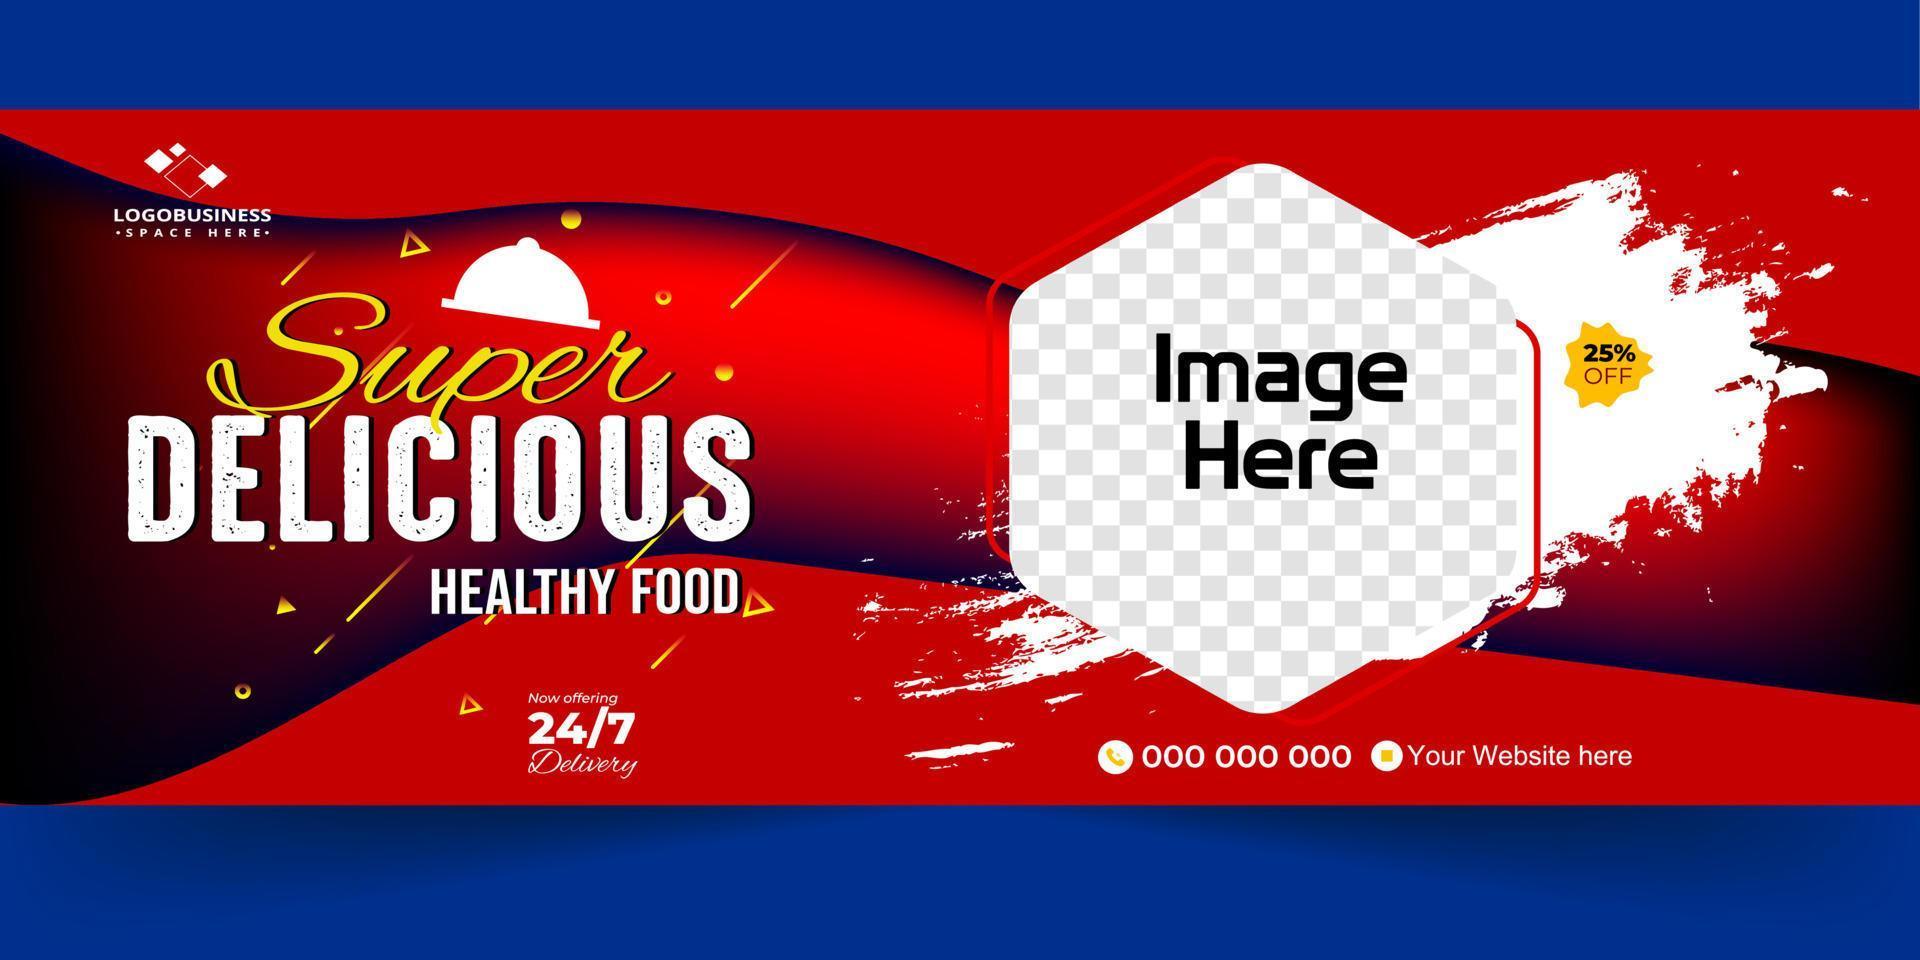 Food Template and Restaurant Web Banner, Burger banner design, Social media Banner, Fast Food digital template, Vector Template design, Delicious Food Restaurant Banner.